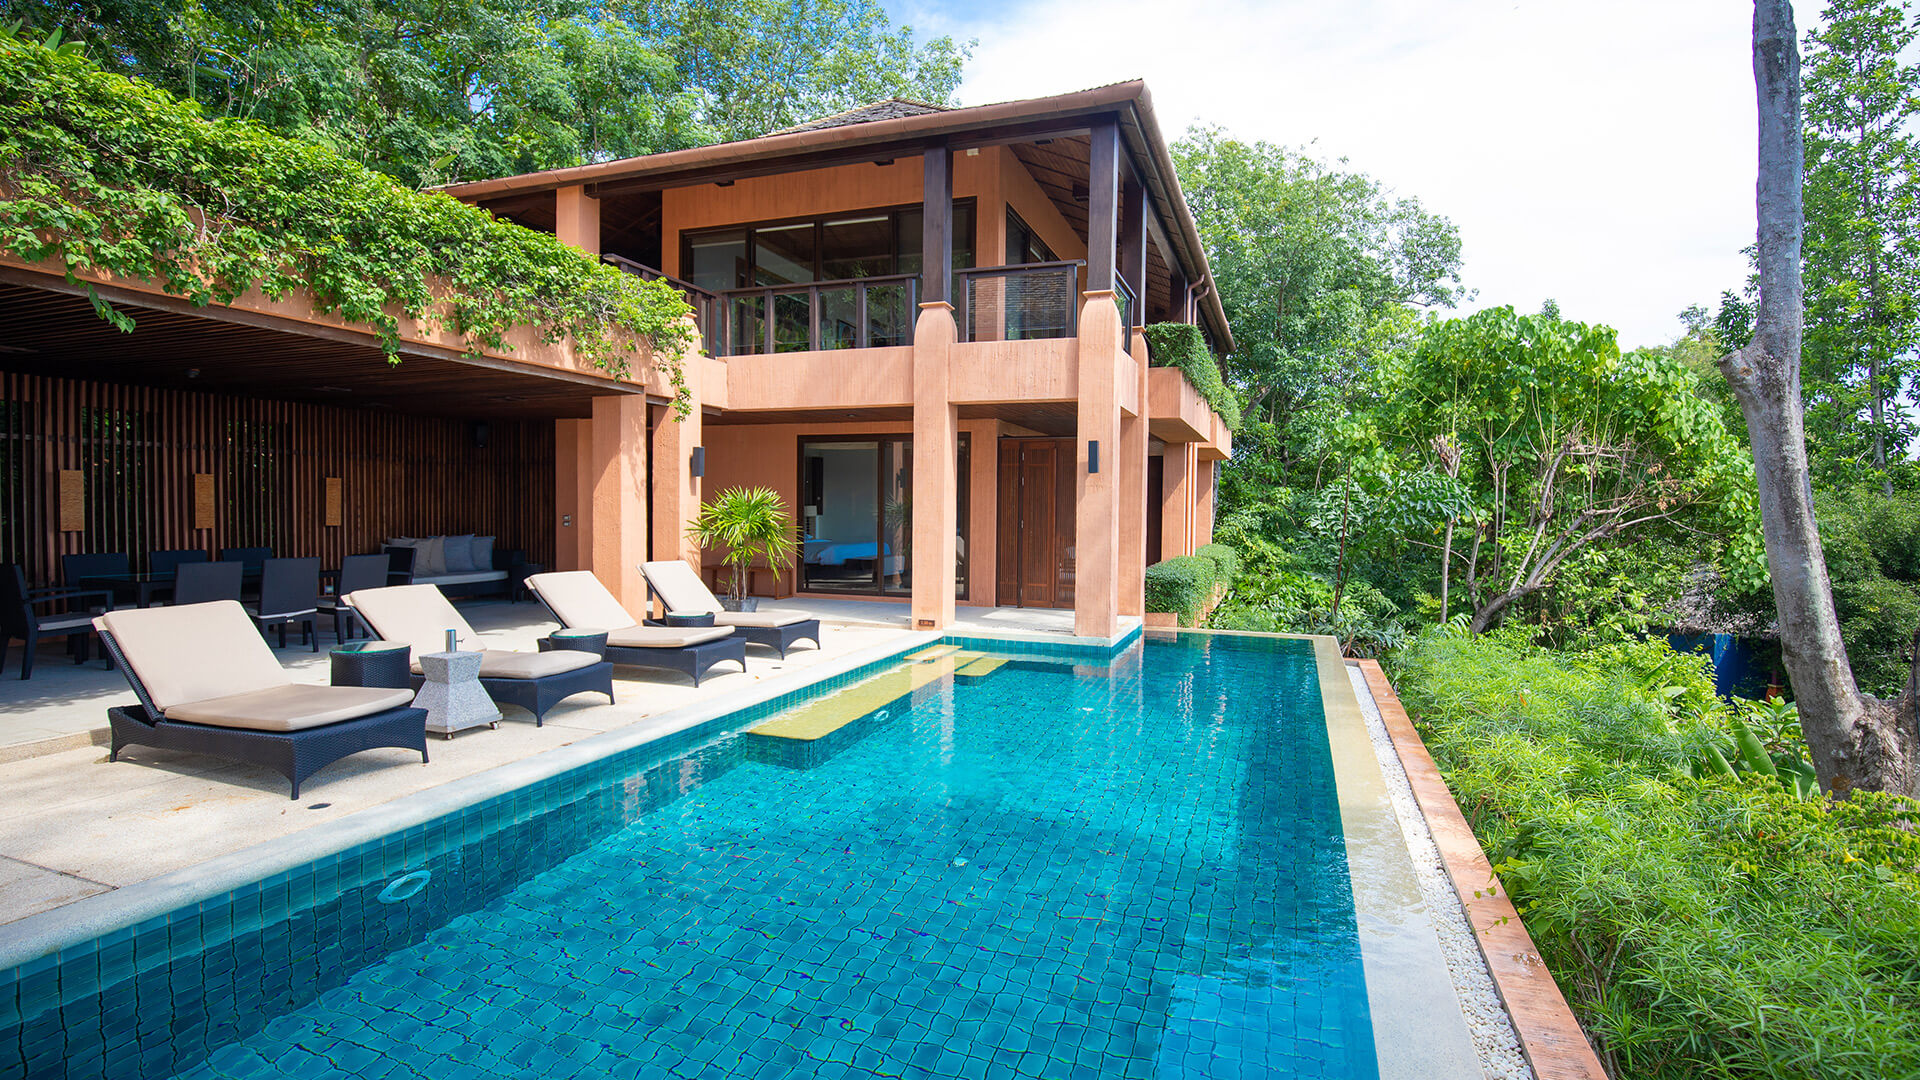 3 bedroom residence villa partial garden pool view luxury hotel resort phuket